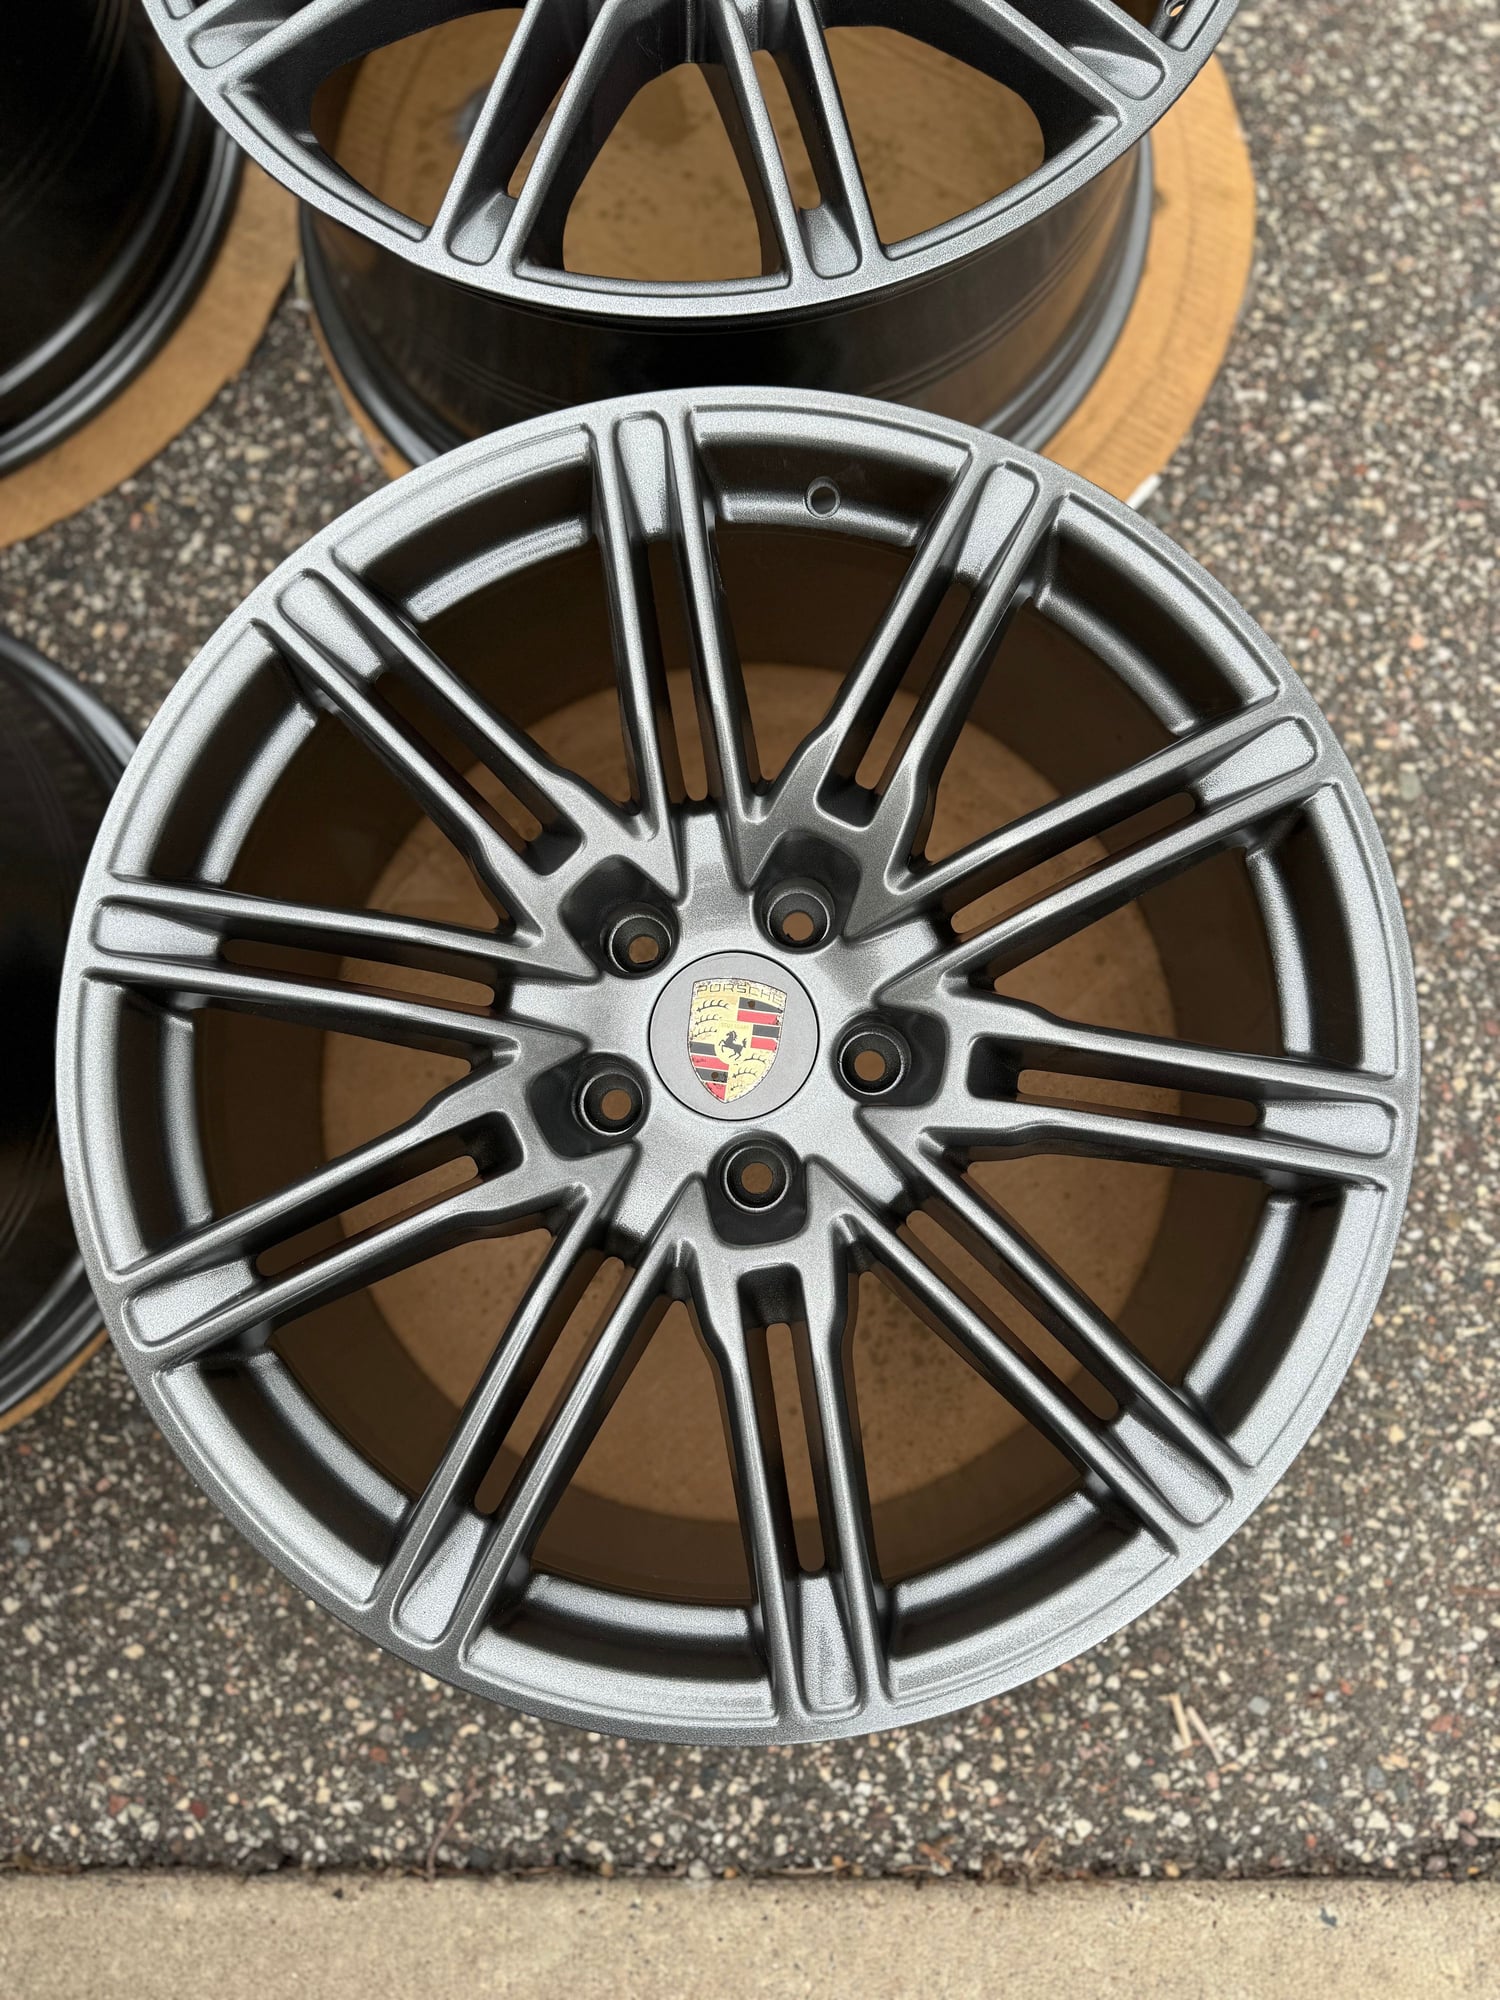 2019 Porsche GT3 - 21" OEM 958 Porsche Cayenne Sport Edition Wheels - Like New - 9Y0 958 957 955 - Accessories - $3,400 - Plymouth, MN 55447, United States